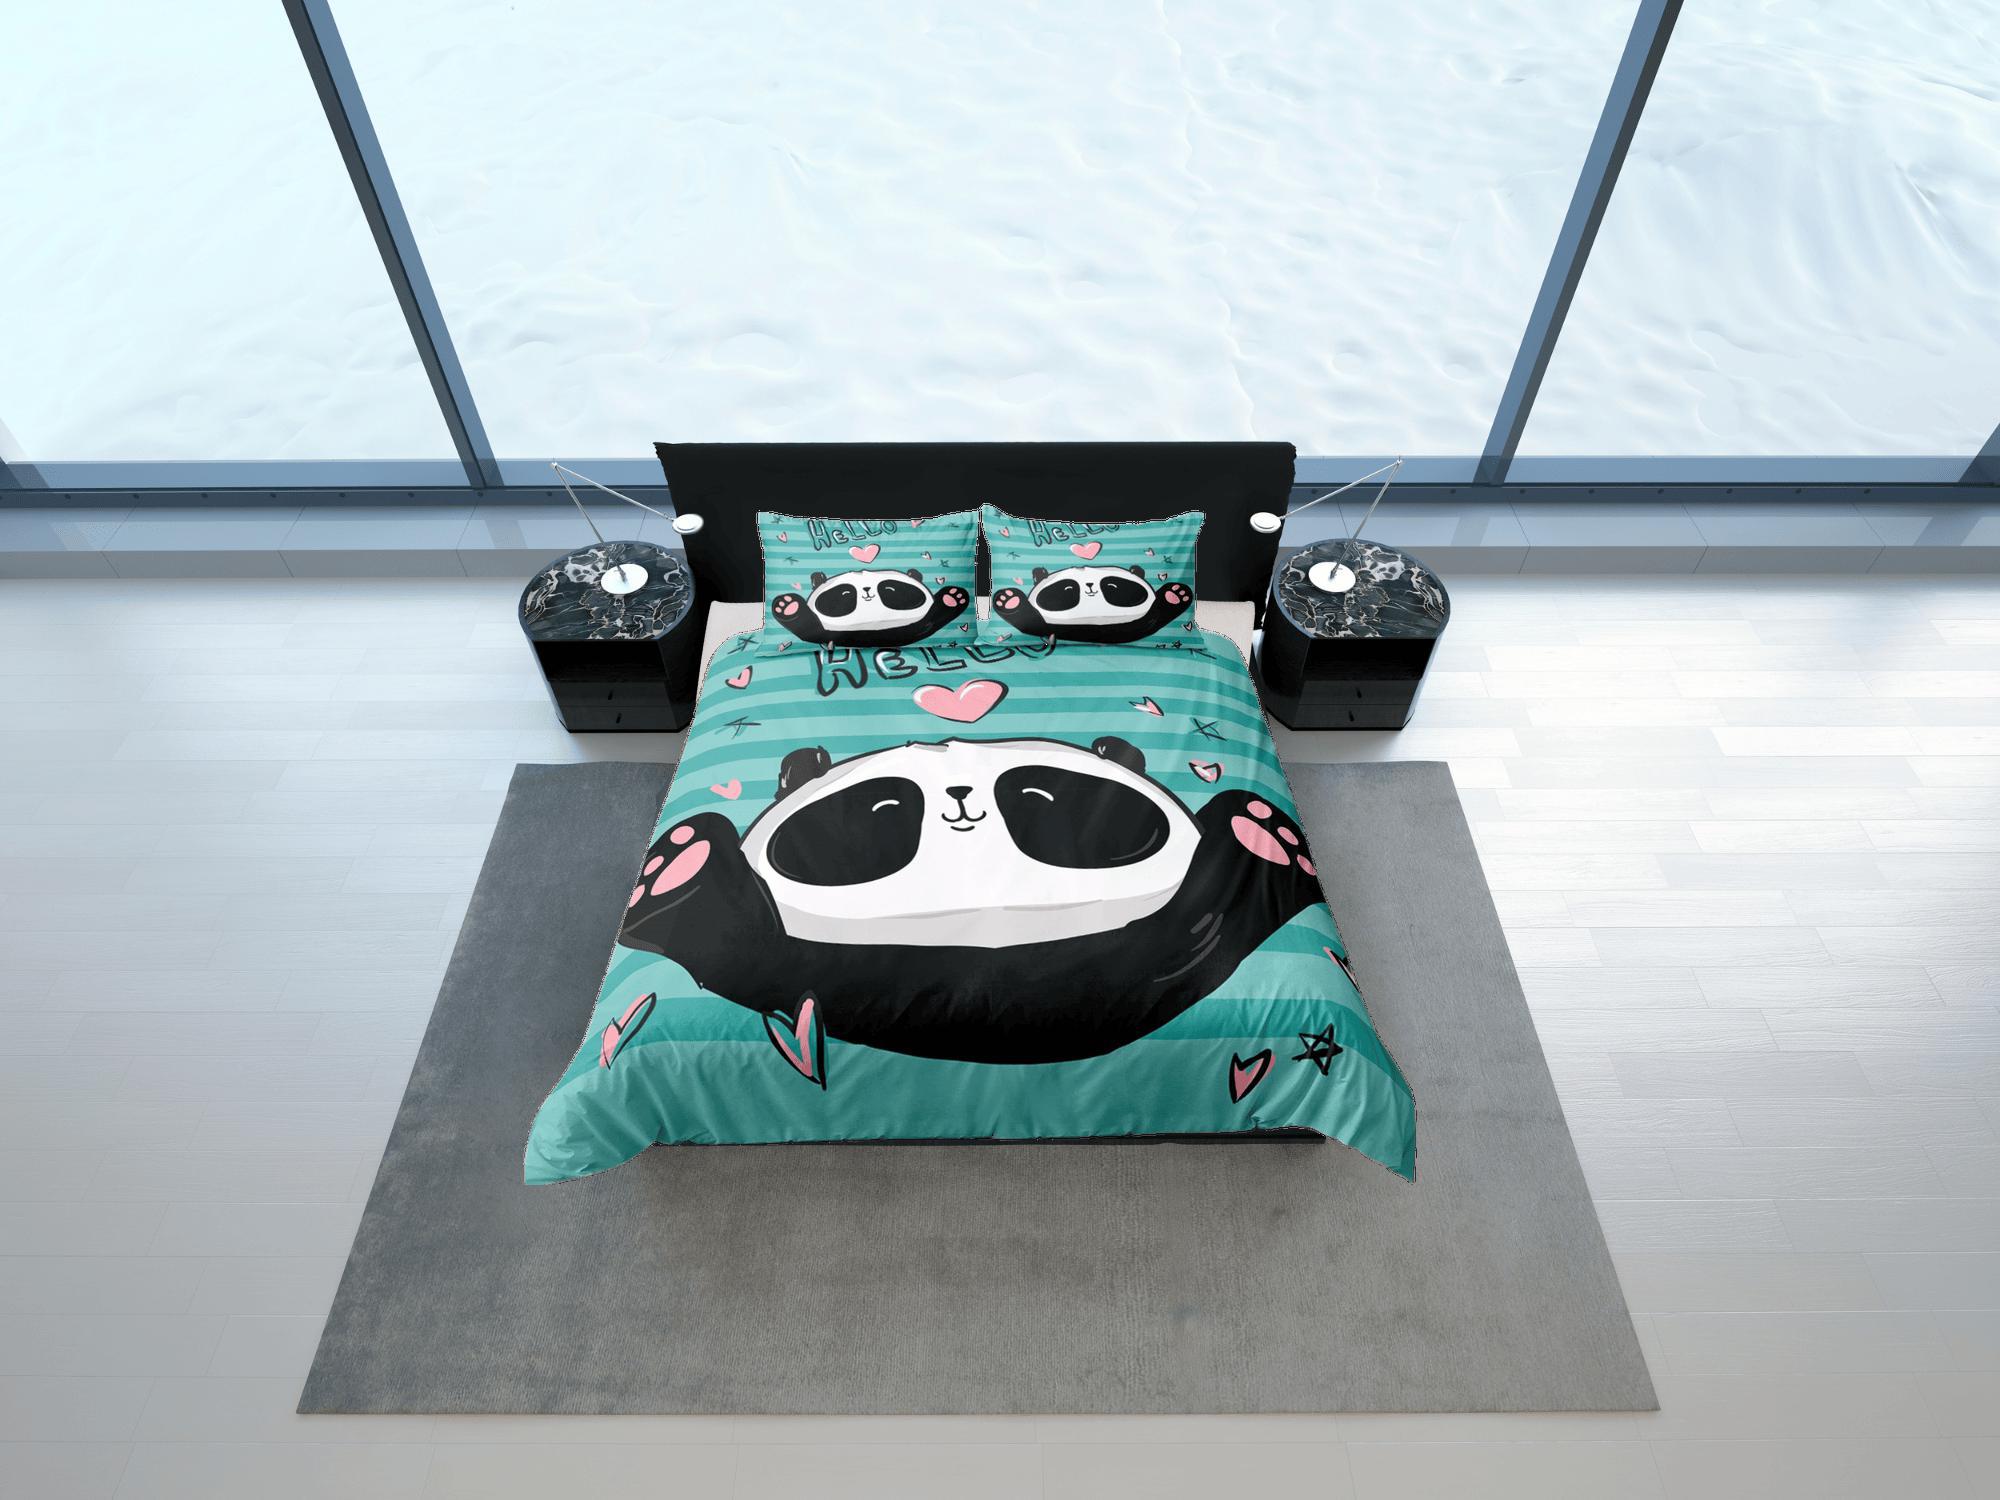 daintyduvet Cute Panda Lover Green Duvet Cover Set Colorful Bedspread, Kids Bedding Pillowcase